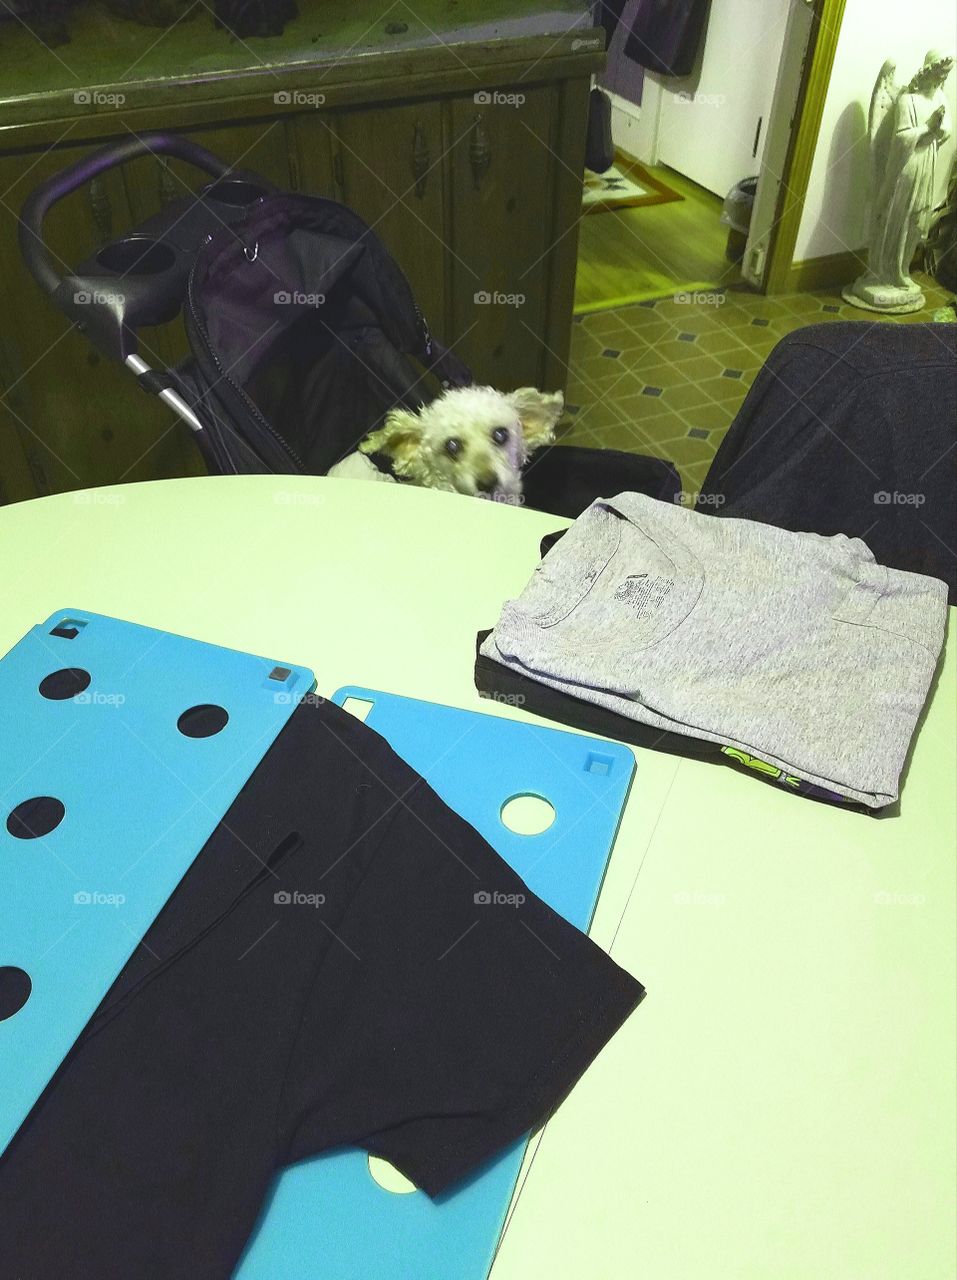 Using Folding Board, doing tee shirts laundry with dog watching!